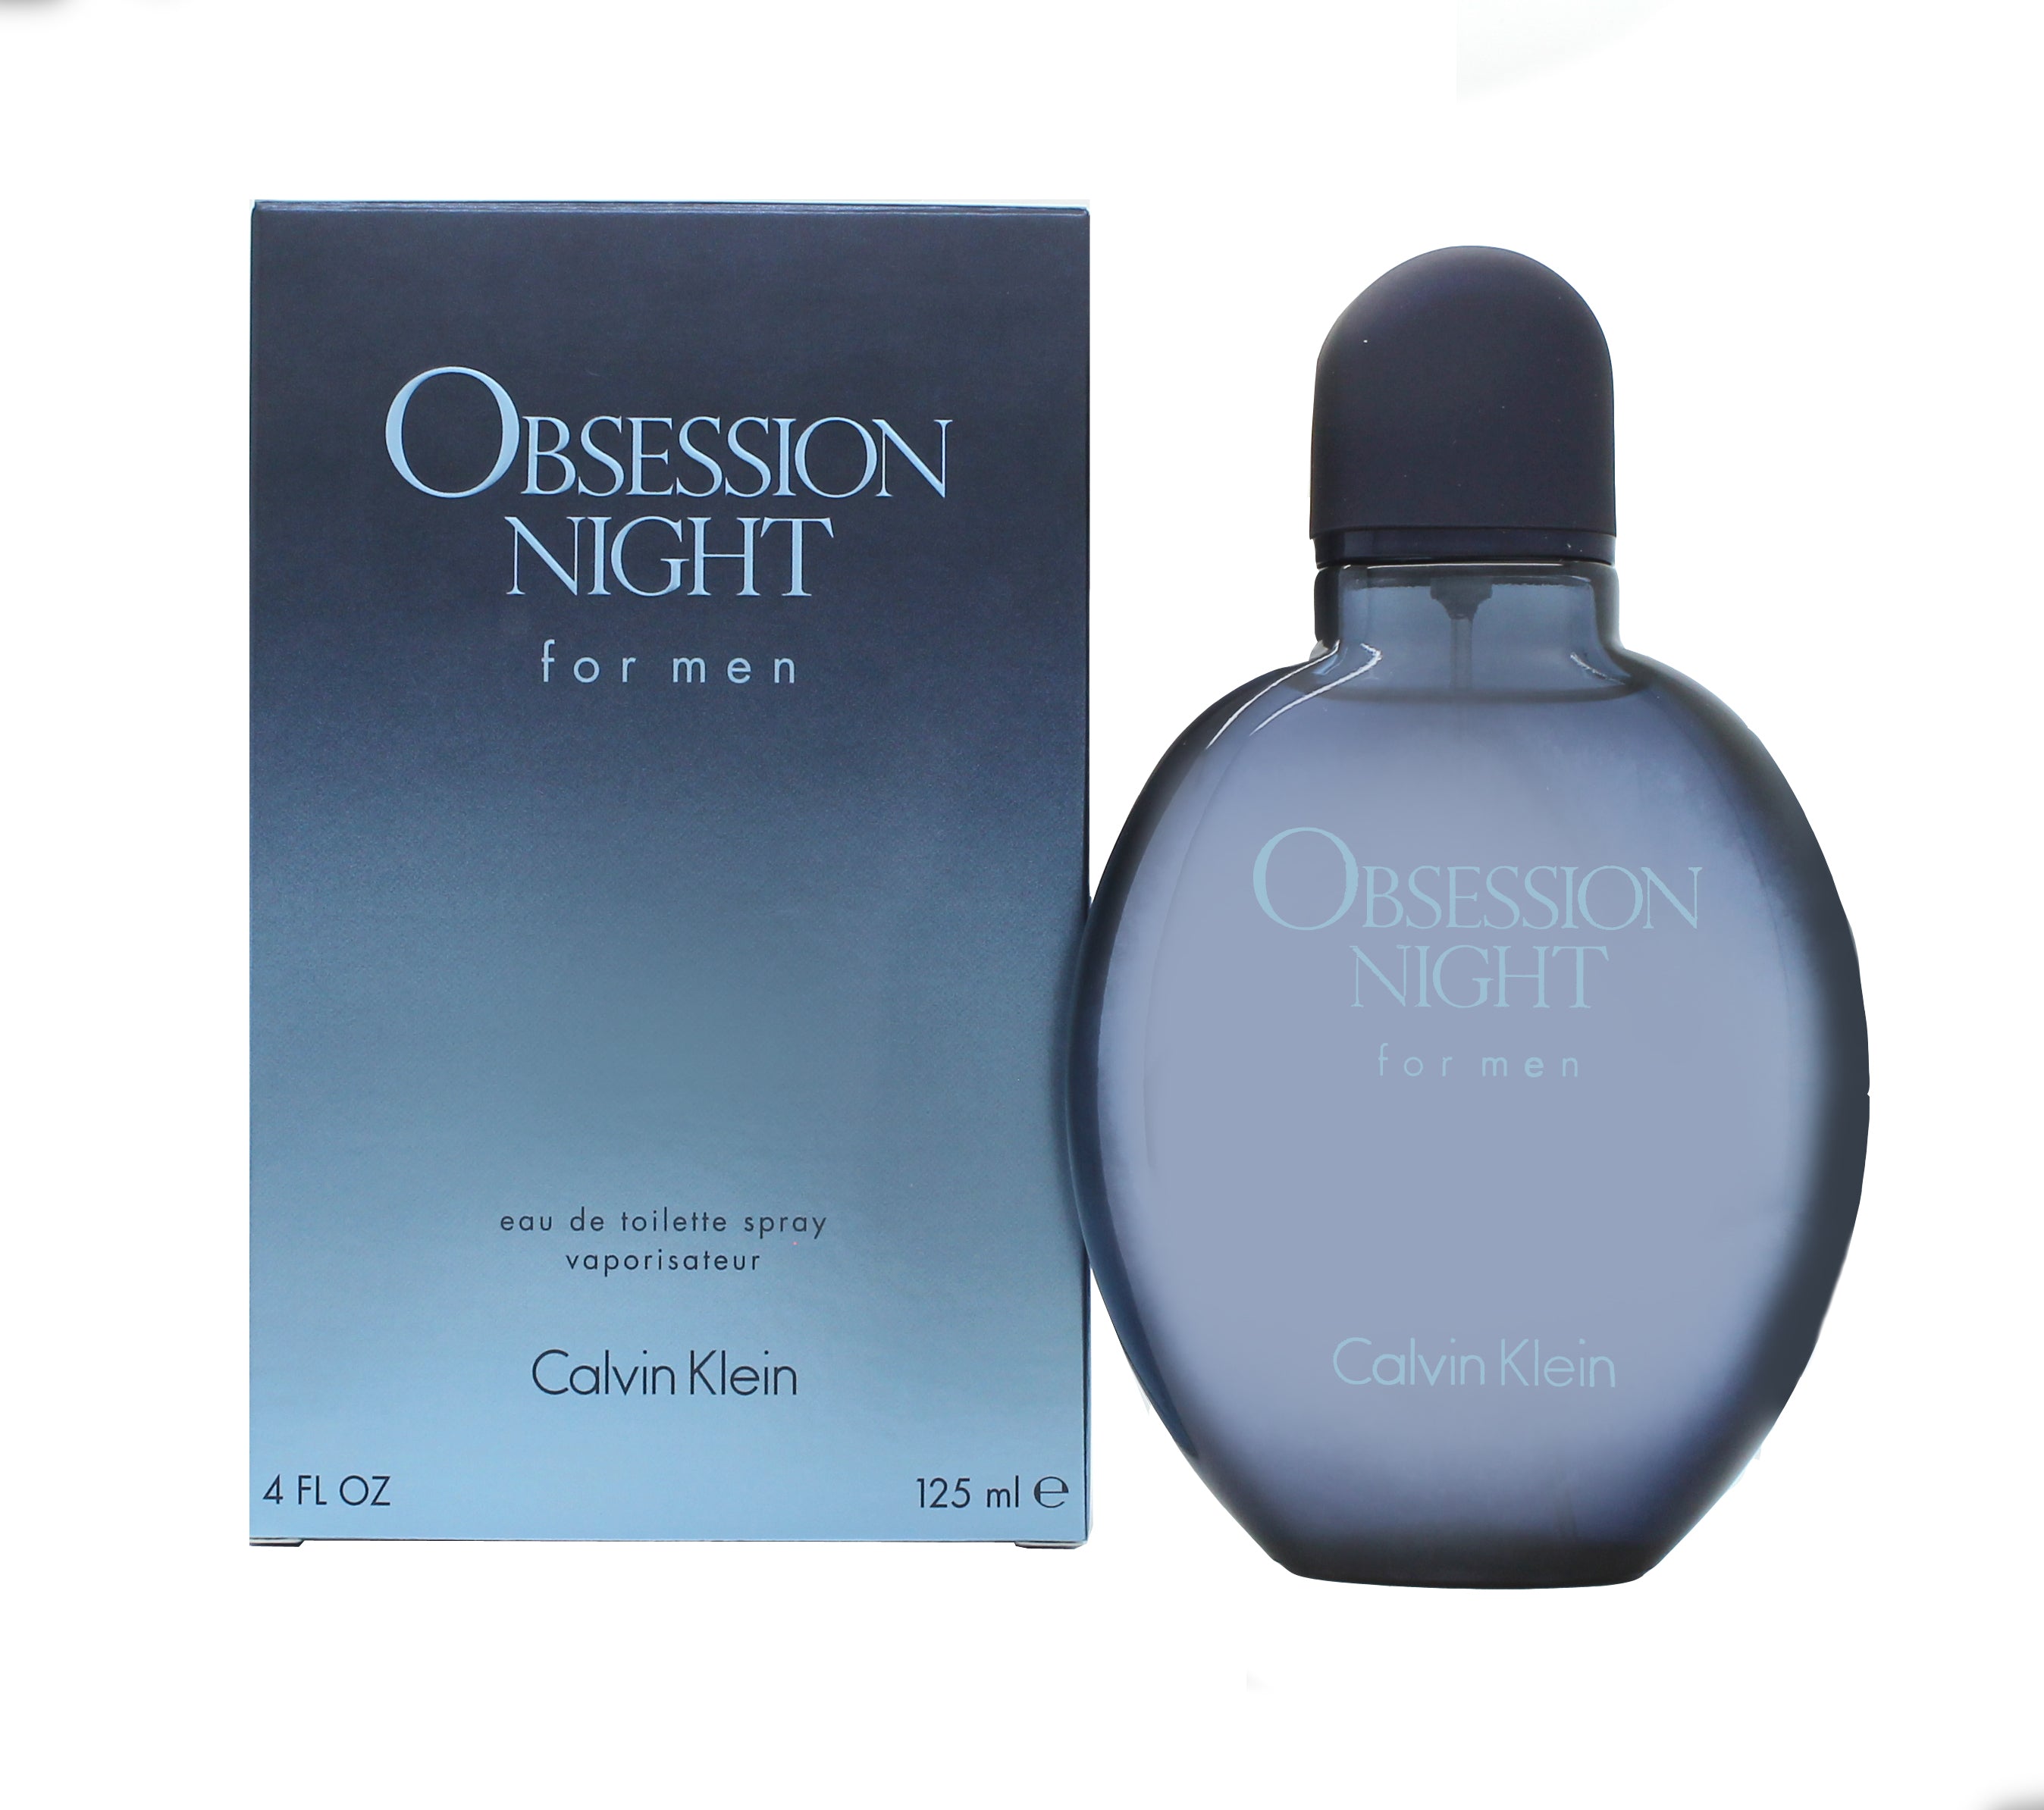 View Calvin Klein Obsession Night Eau de Toilette 125ml Spray information